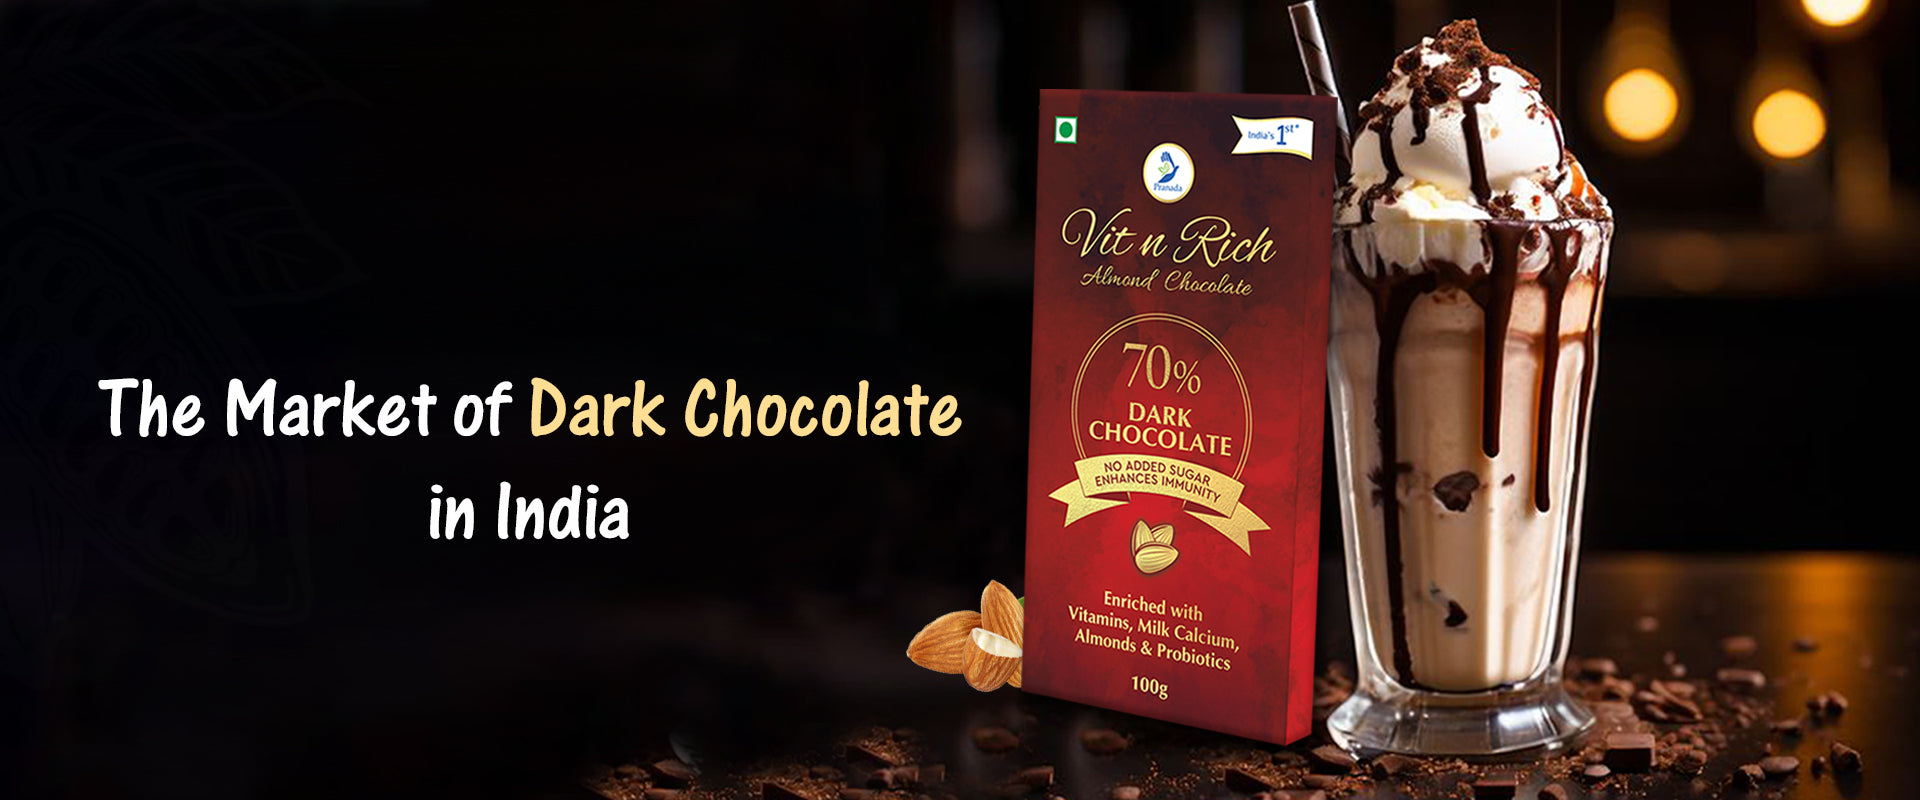 The Market of Dark Chocolate in India